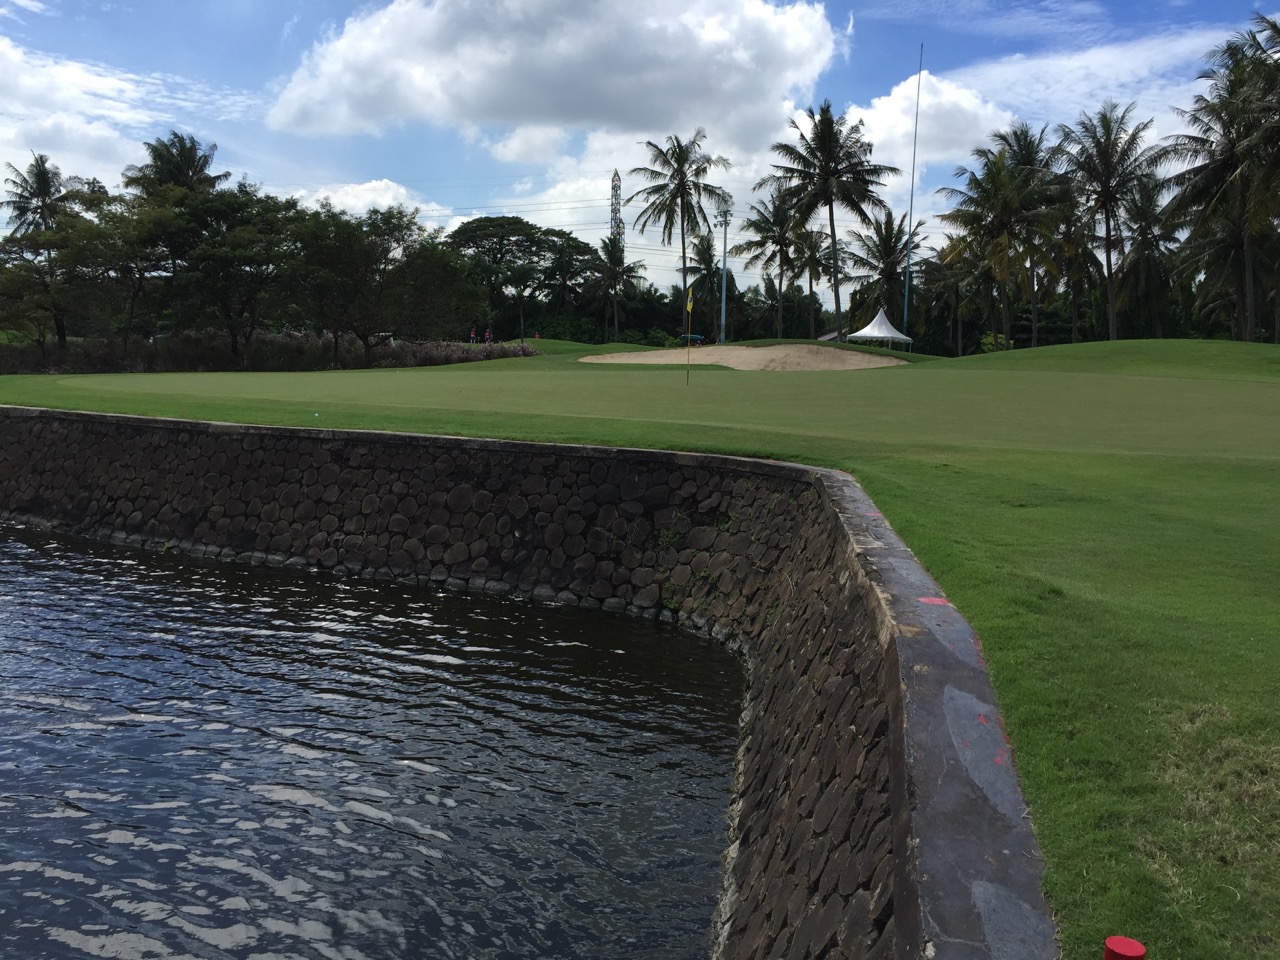 Damai Indah Golf-( PIK ) course- water is a major hazard...